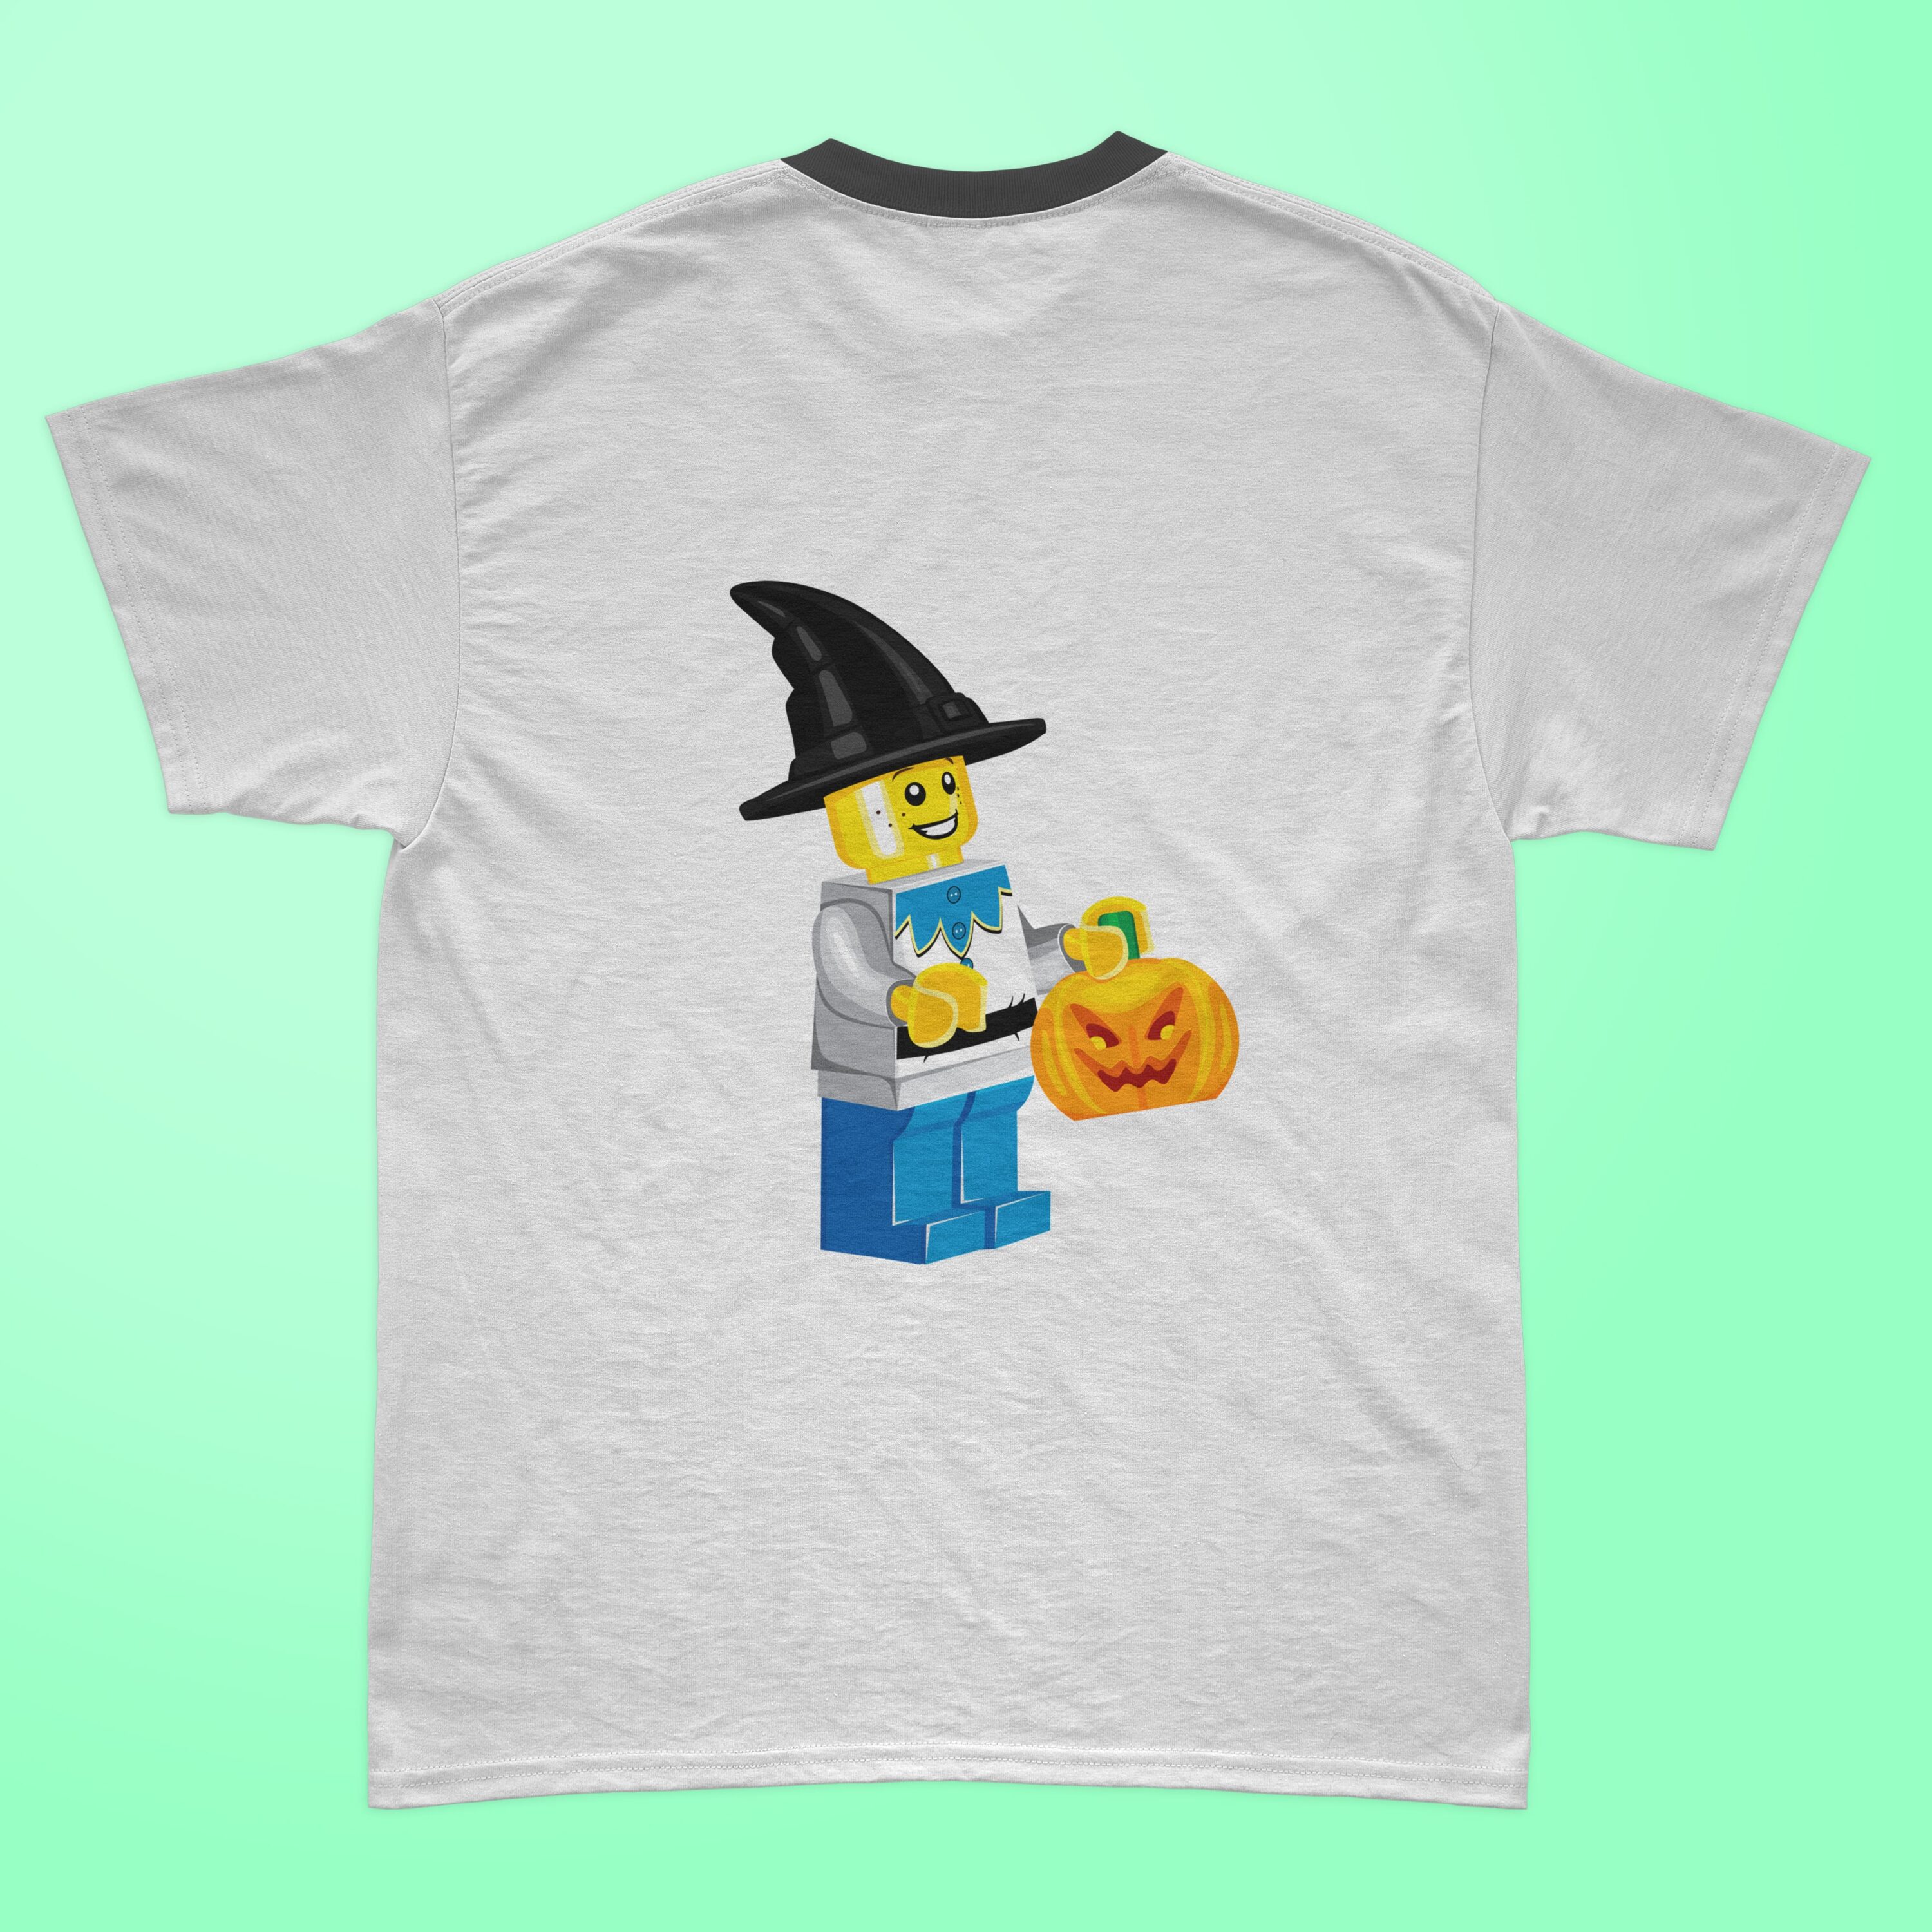 Cute lego man printed on the t-shirt.